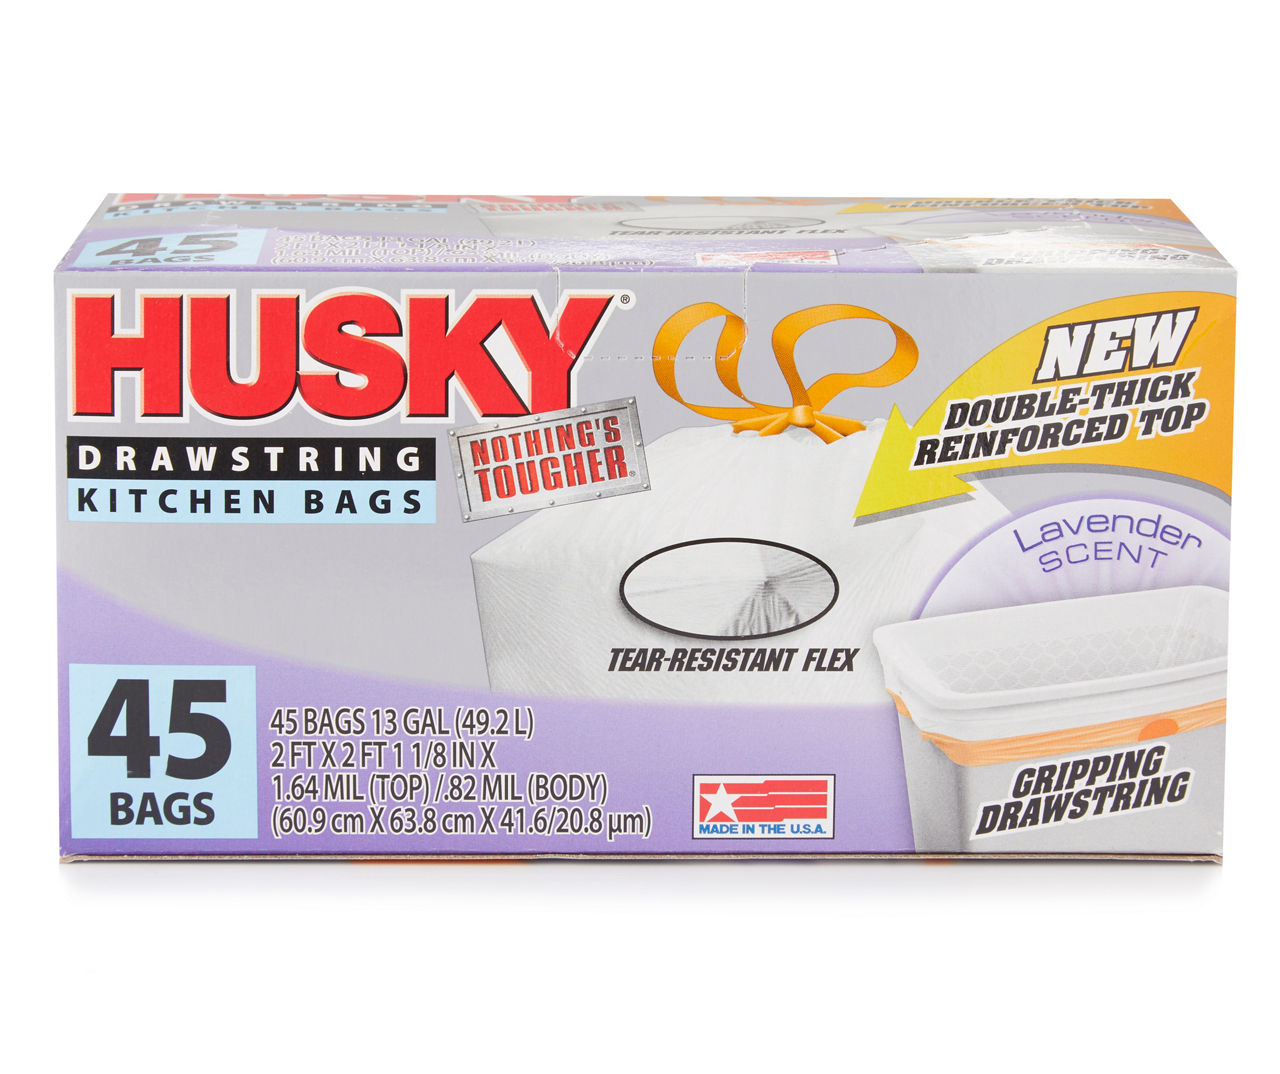 Husky Tall Kitchen Trash Bags, 13 Gallon, 120 Bags (Expandable Drawstring)